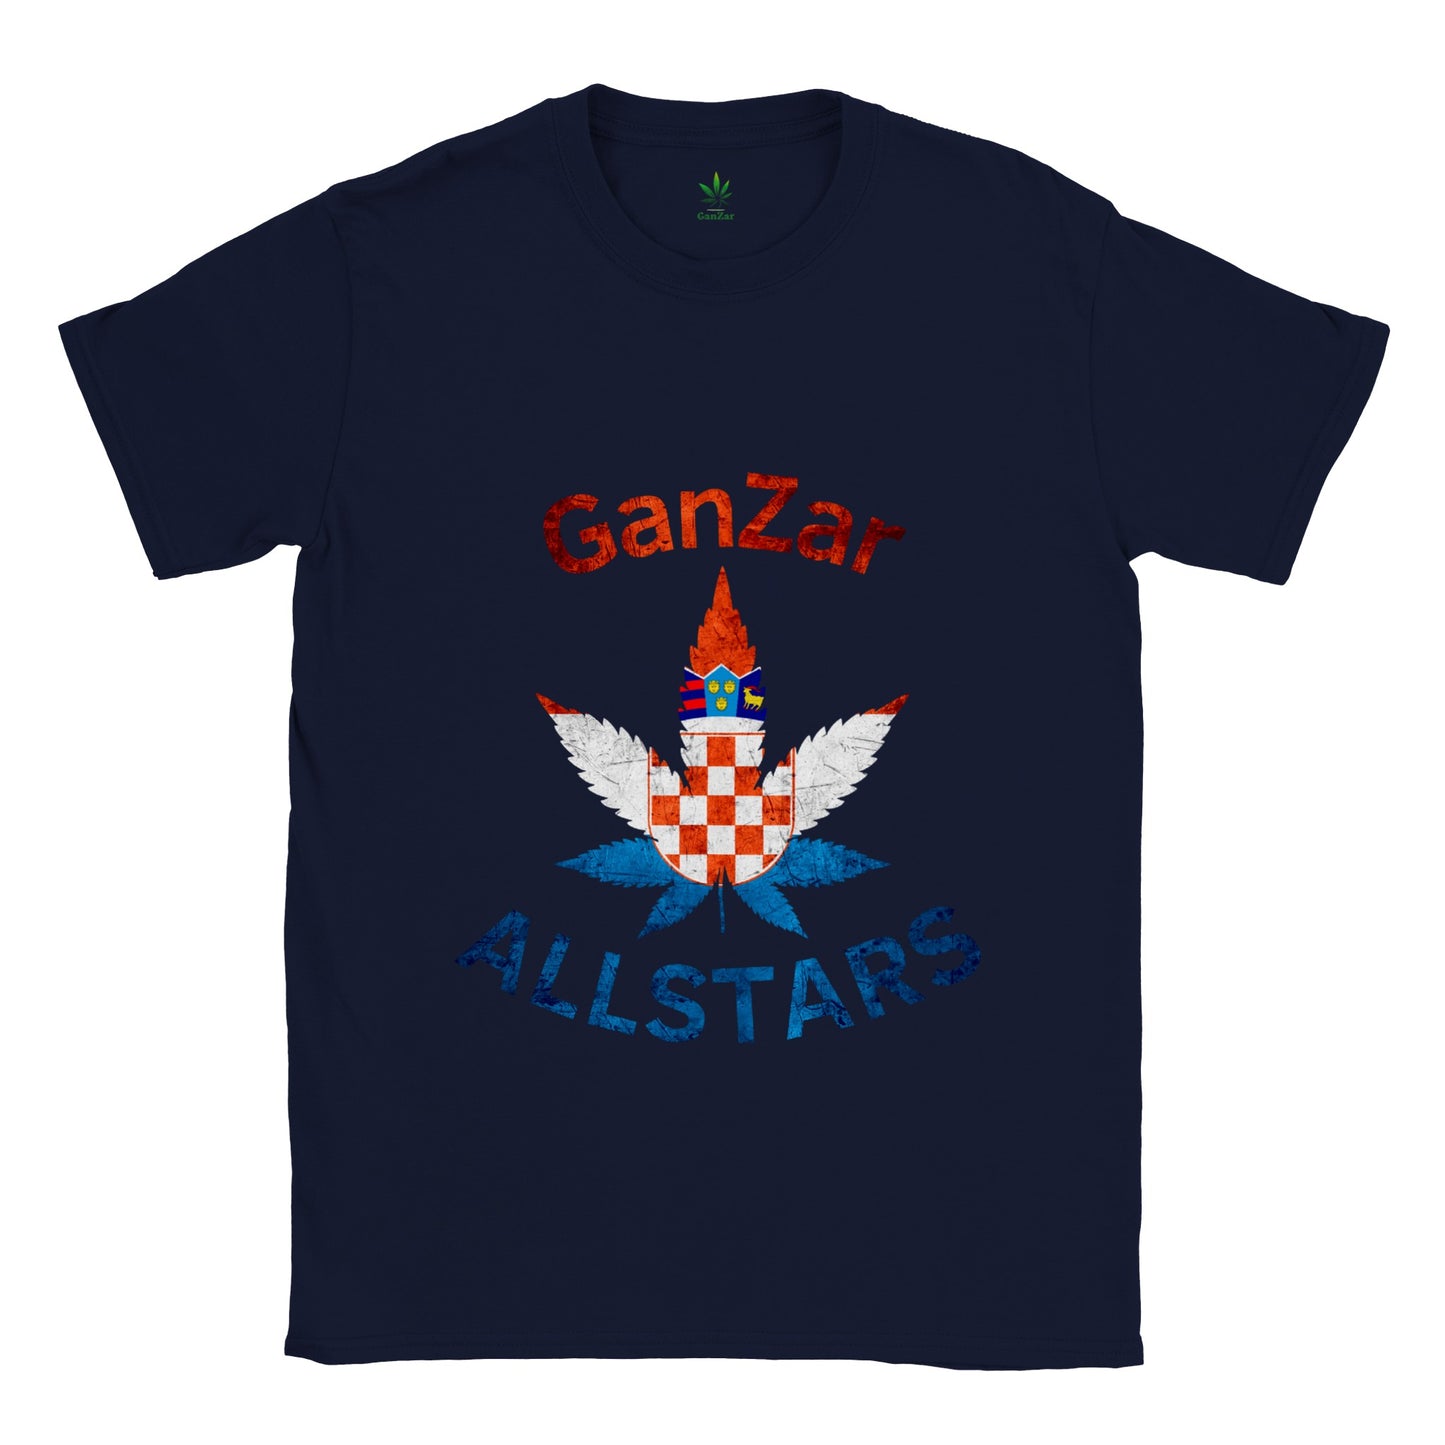 Croatia GanZar Allstars Unisex T-Shirt